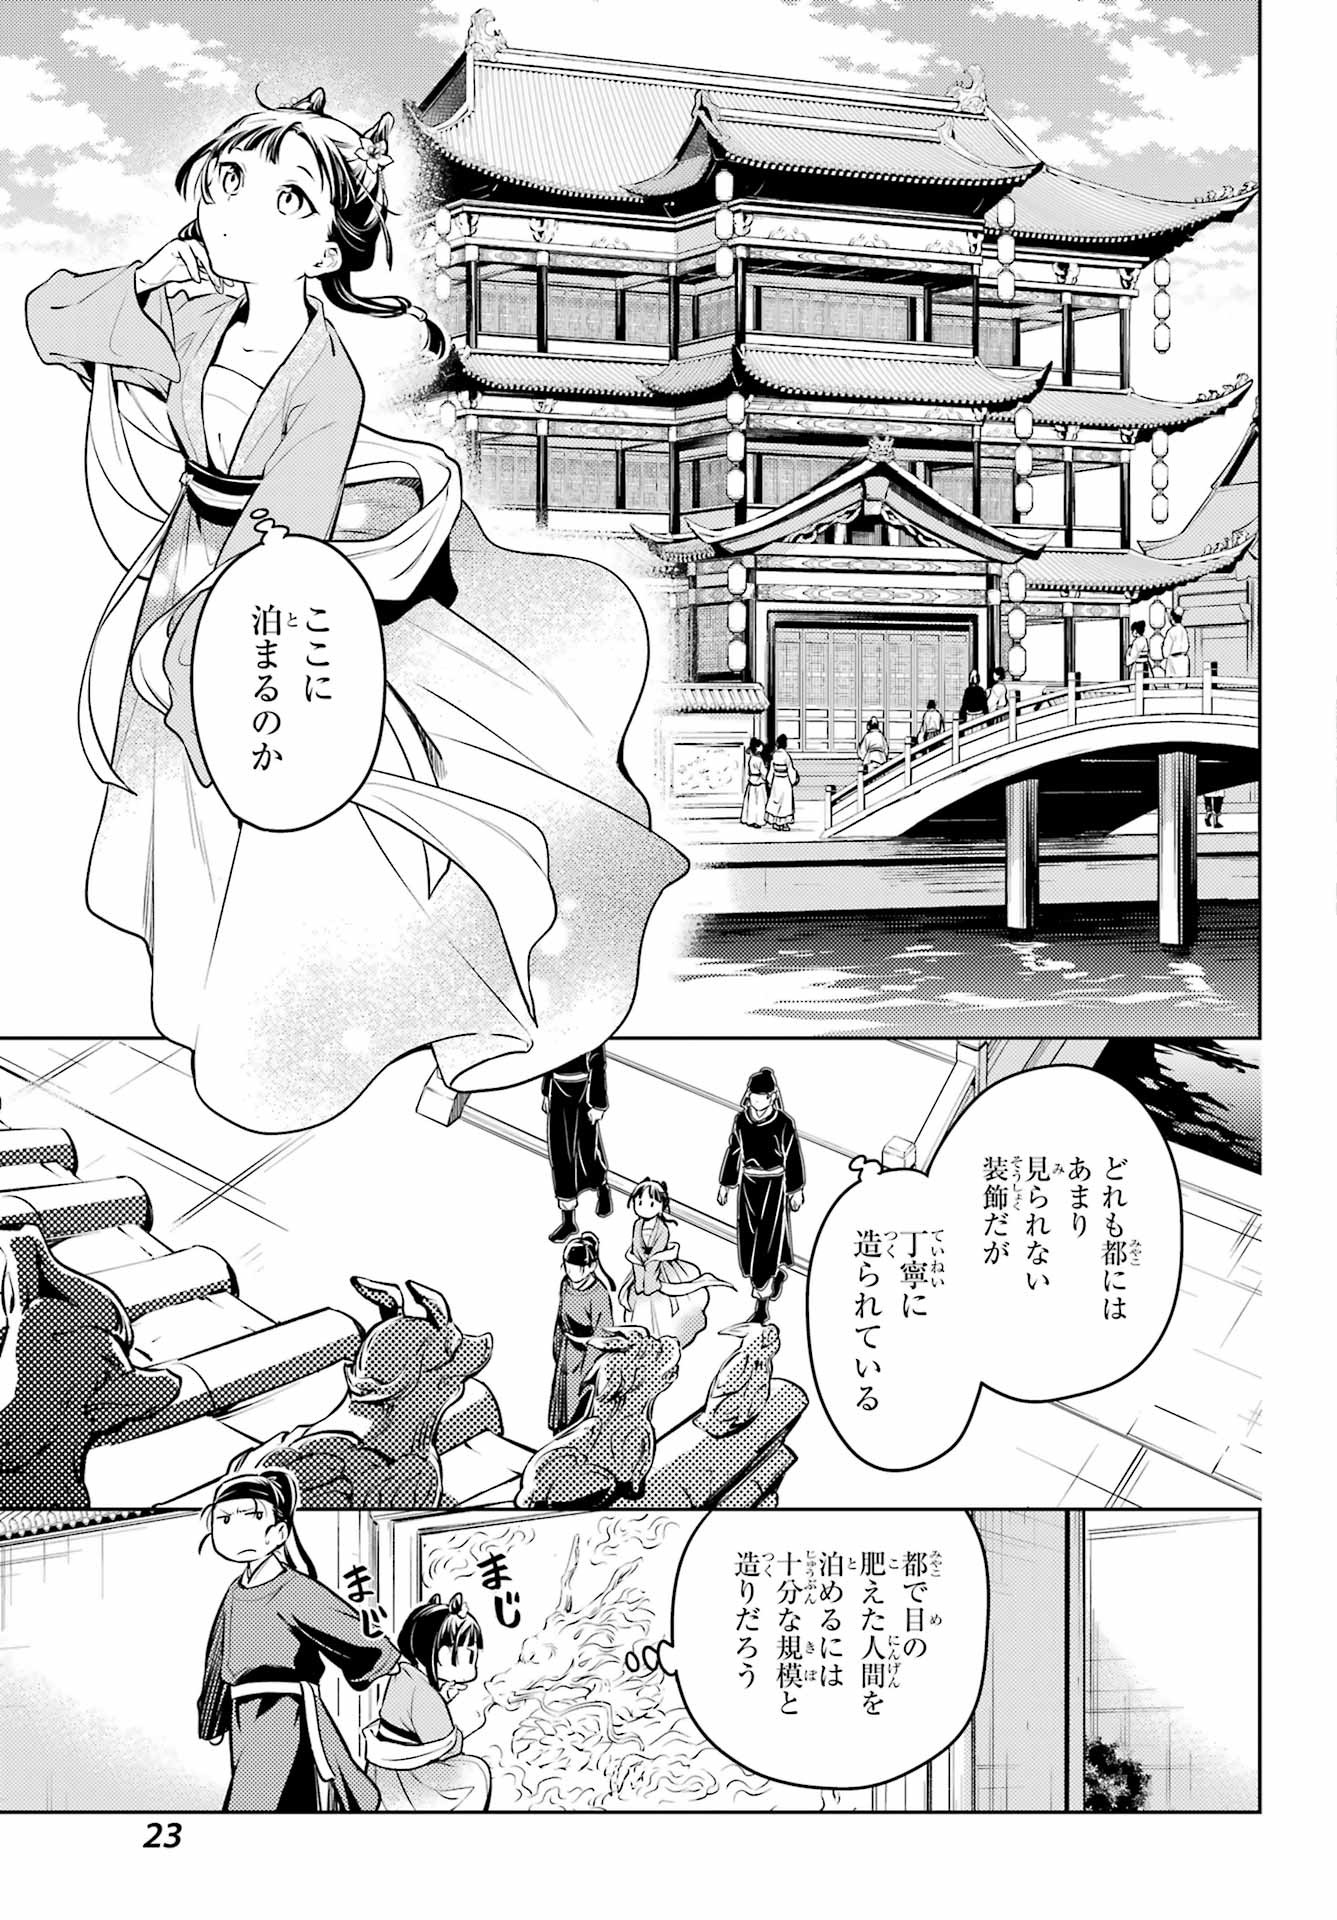 Kusuriya no Hitorigoto - Chapter 60-1 - Page 17